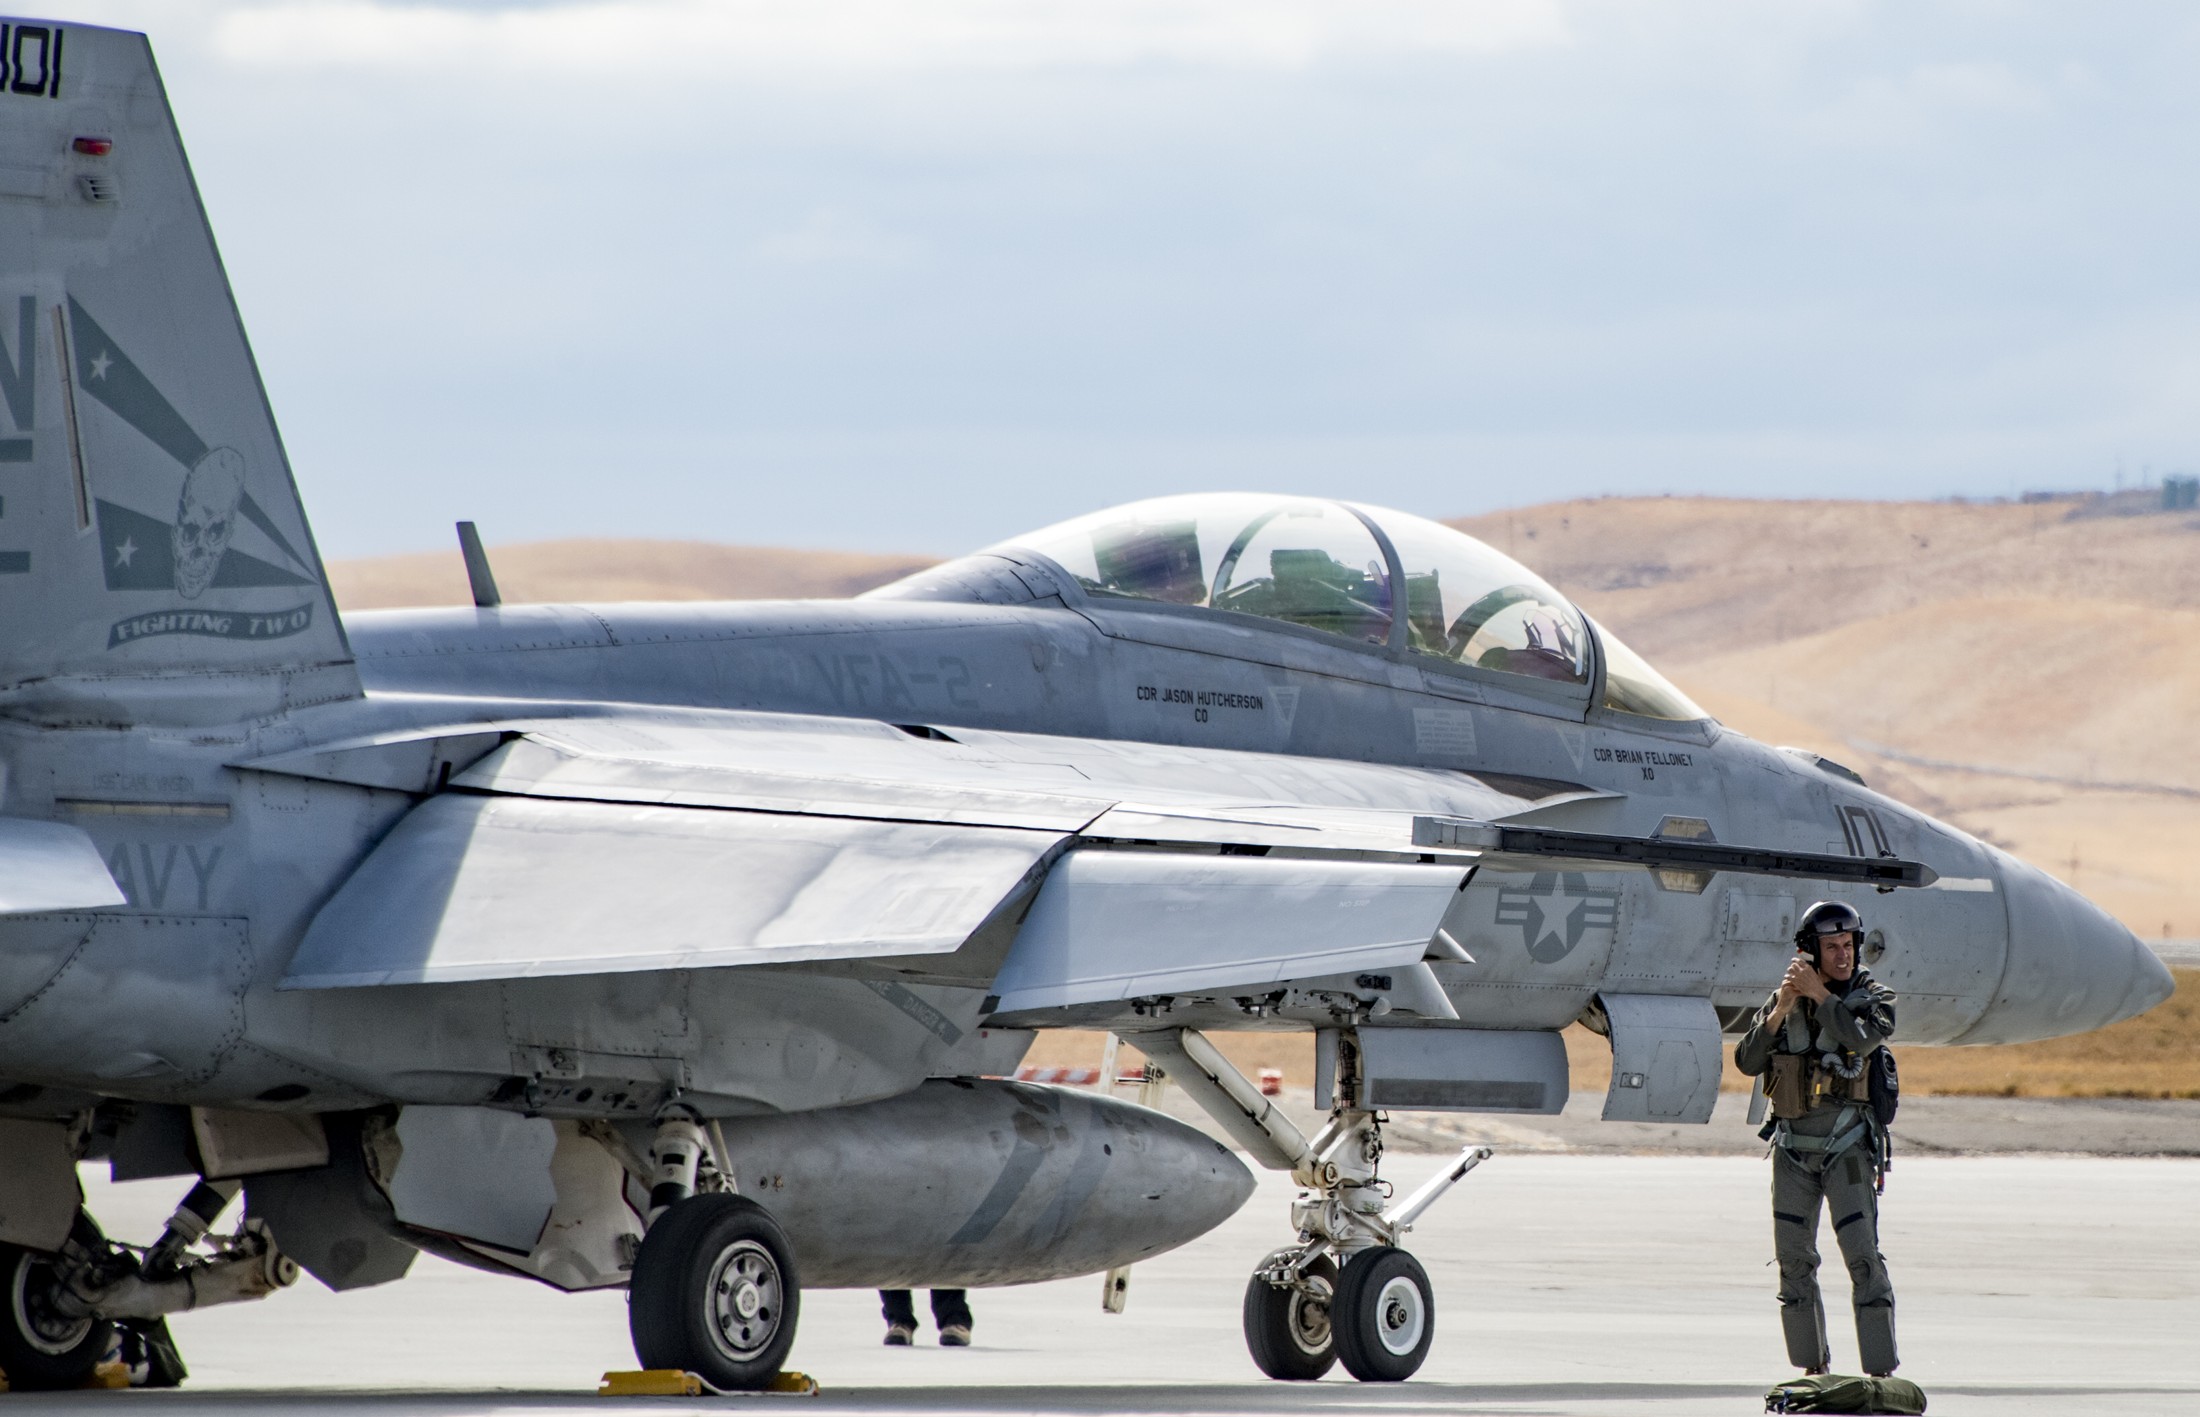 vfa-2 bounty hunters strike fighter squadron us navy f/a-18f super hornet travis afb california 64